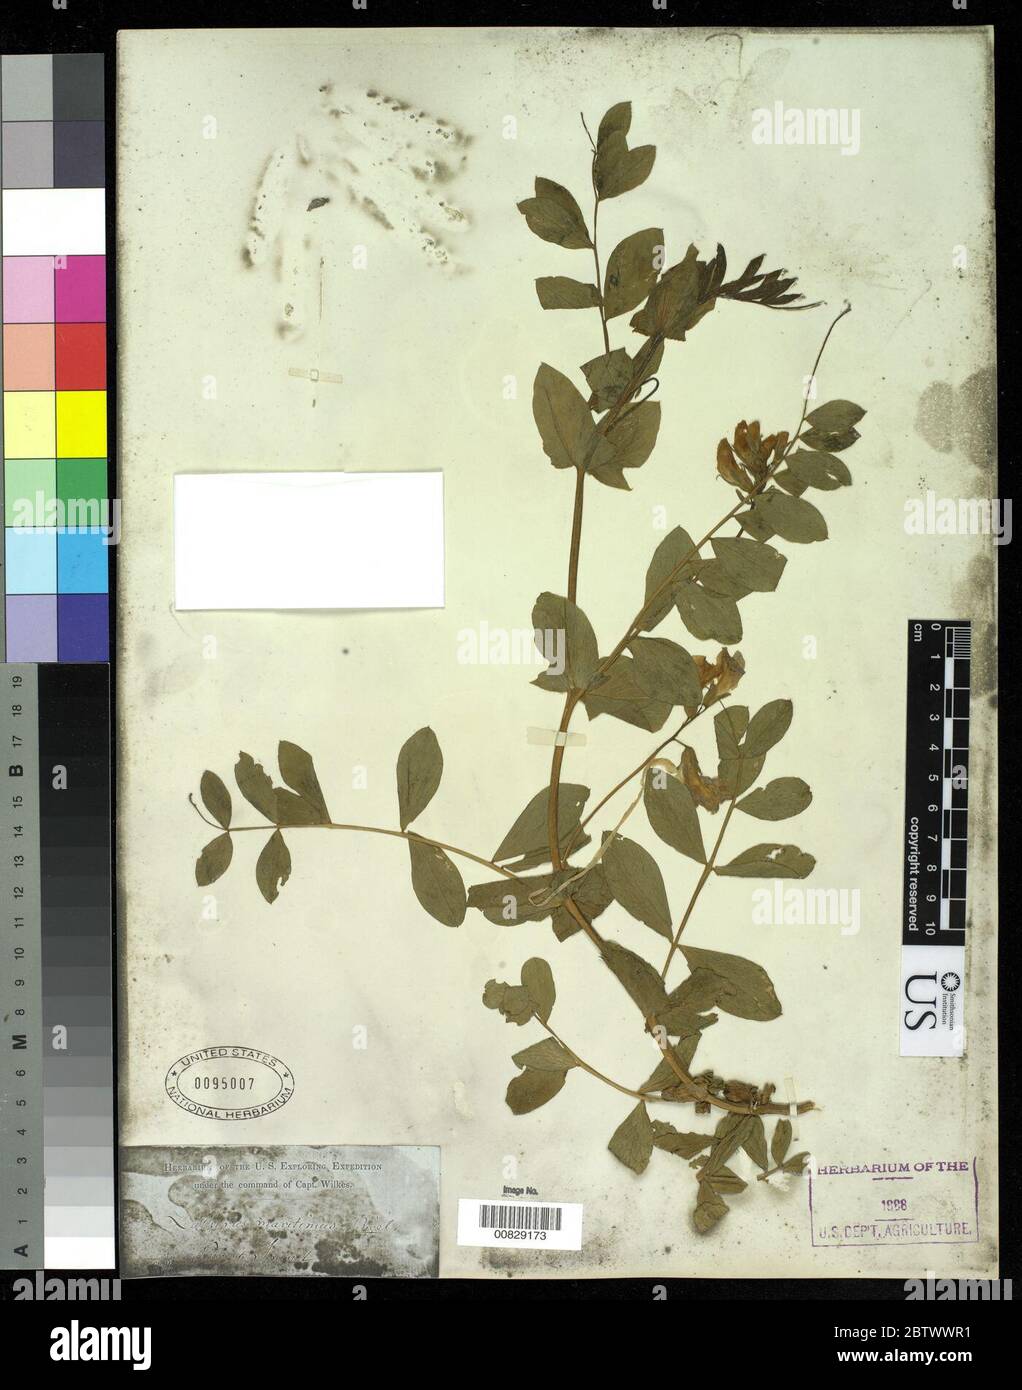 Lathyrus japonicus Willd. Stock Photo